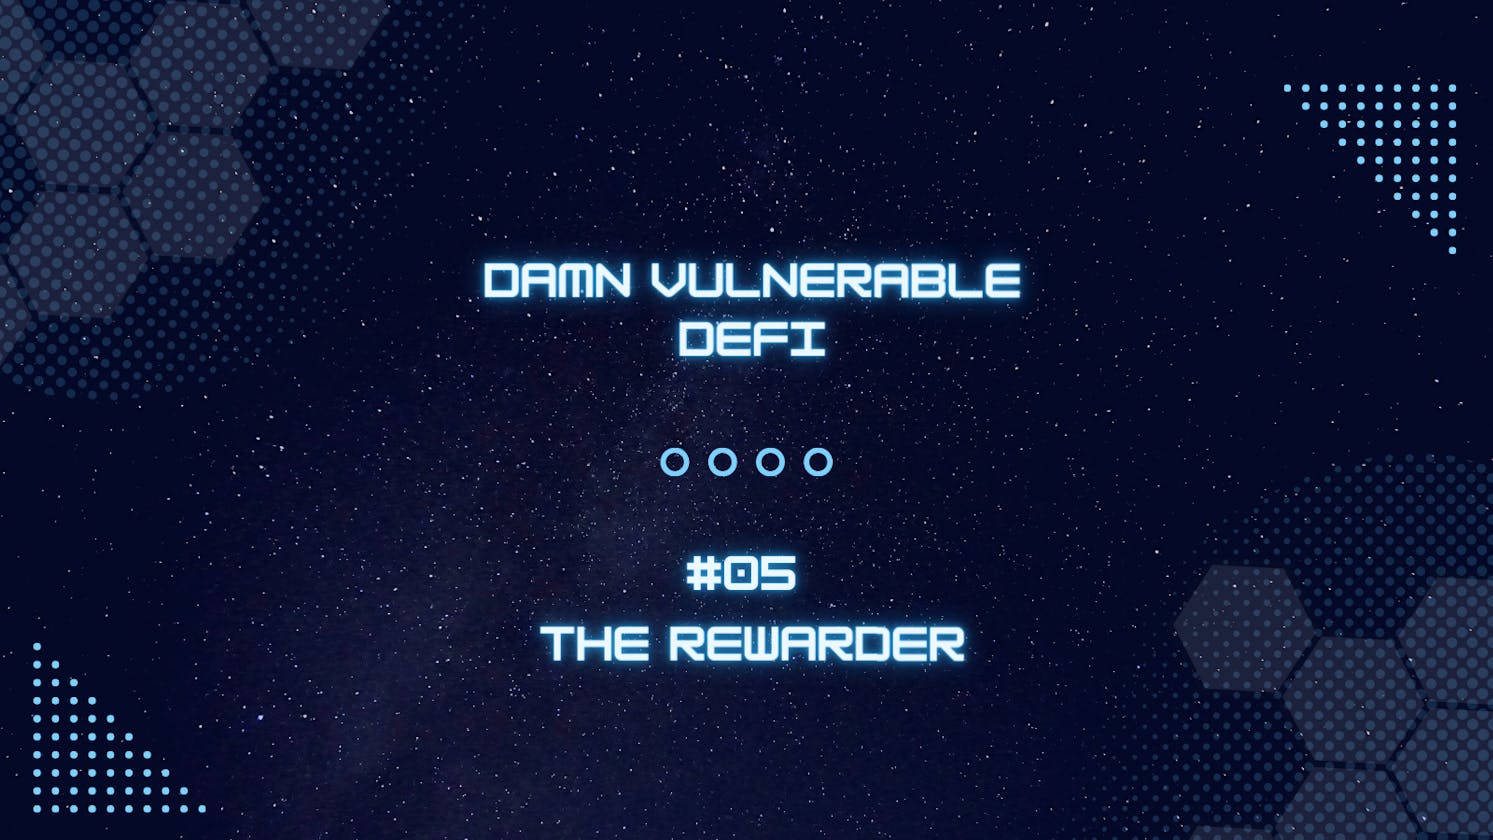 The Rewarder - Damn Vulnerable DeFi #05